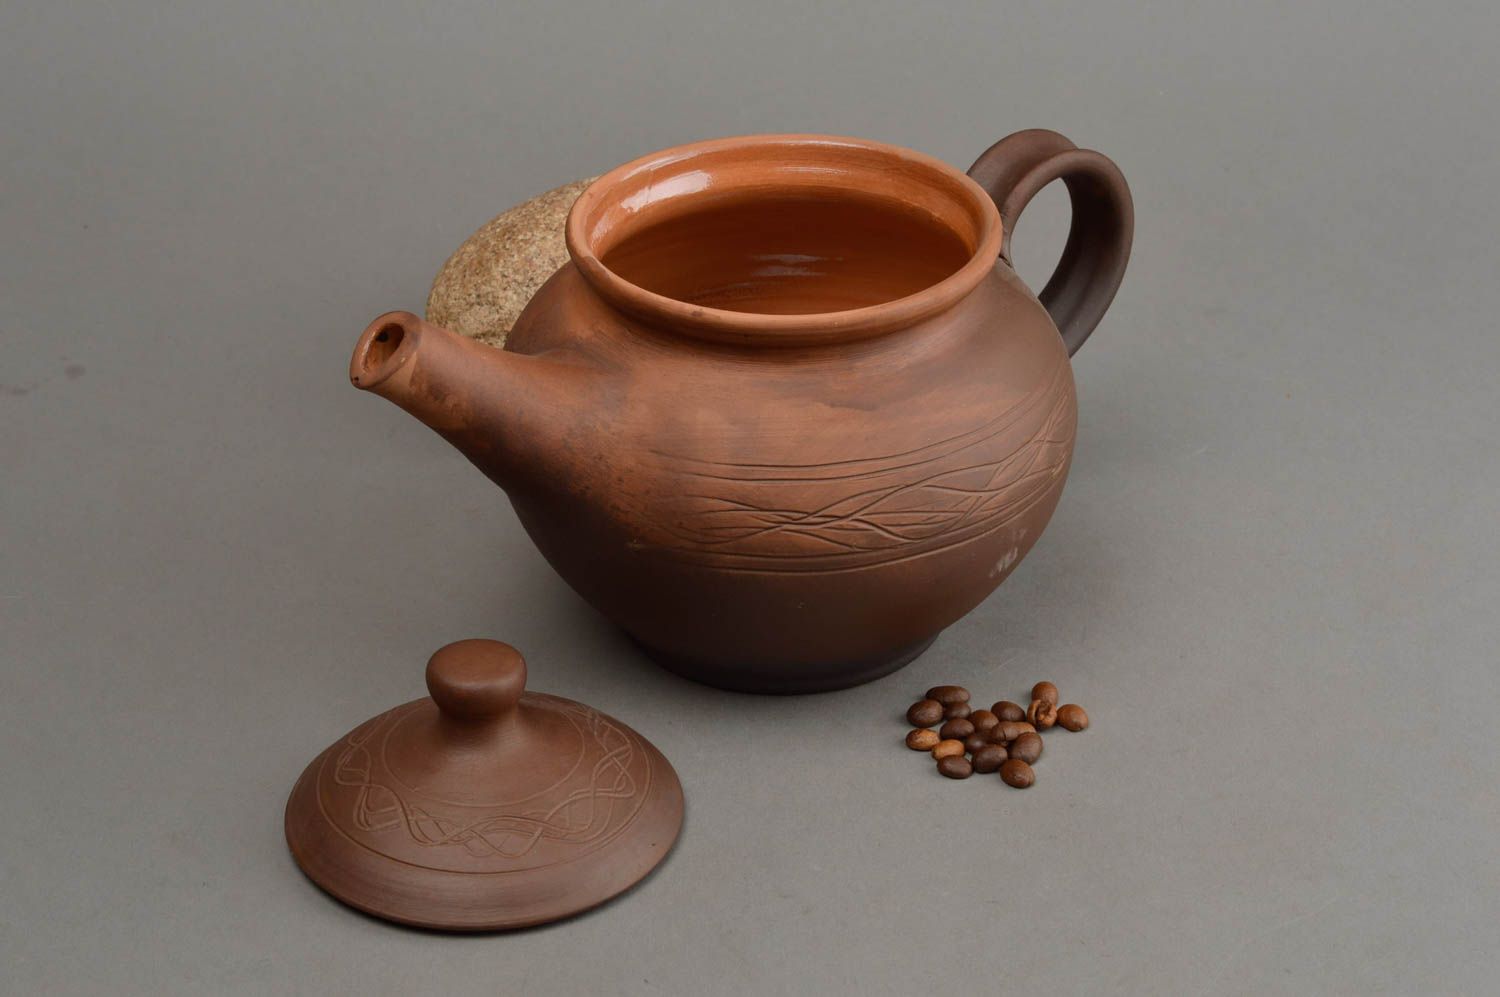 Handmade ceramic teapot ceramic cookware best tea kettles housewarming gift idea photo 1